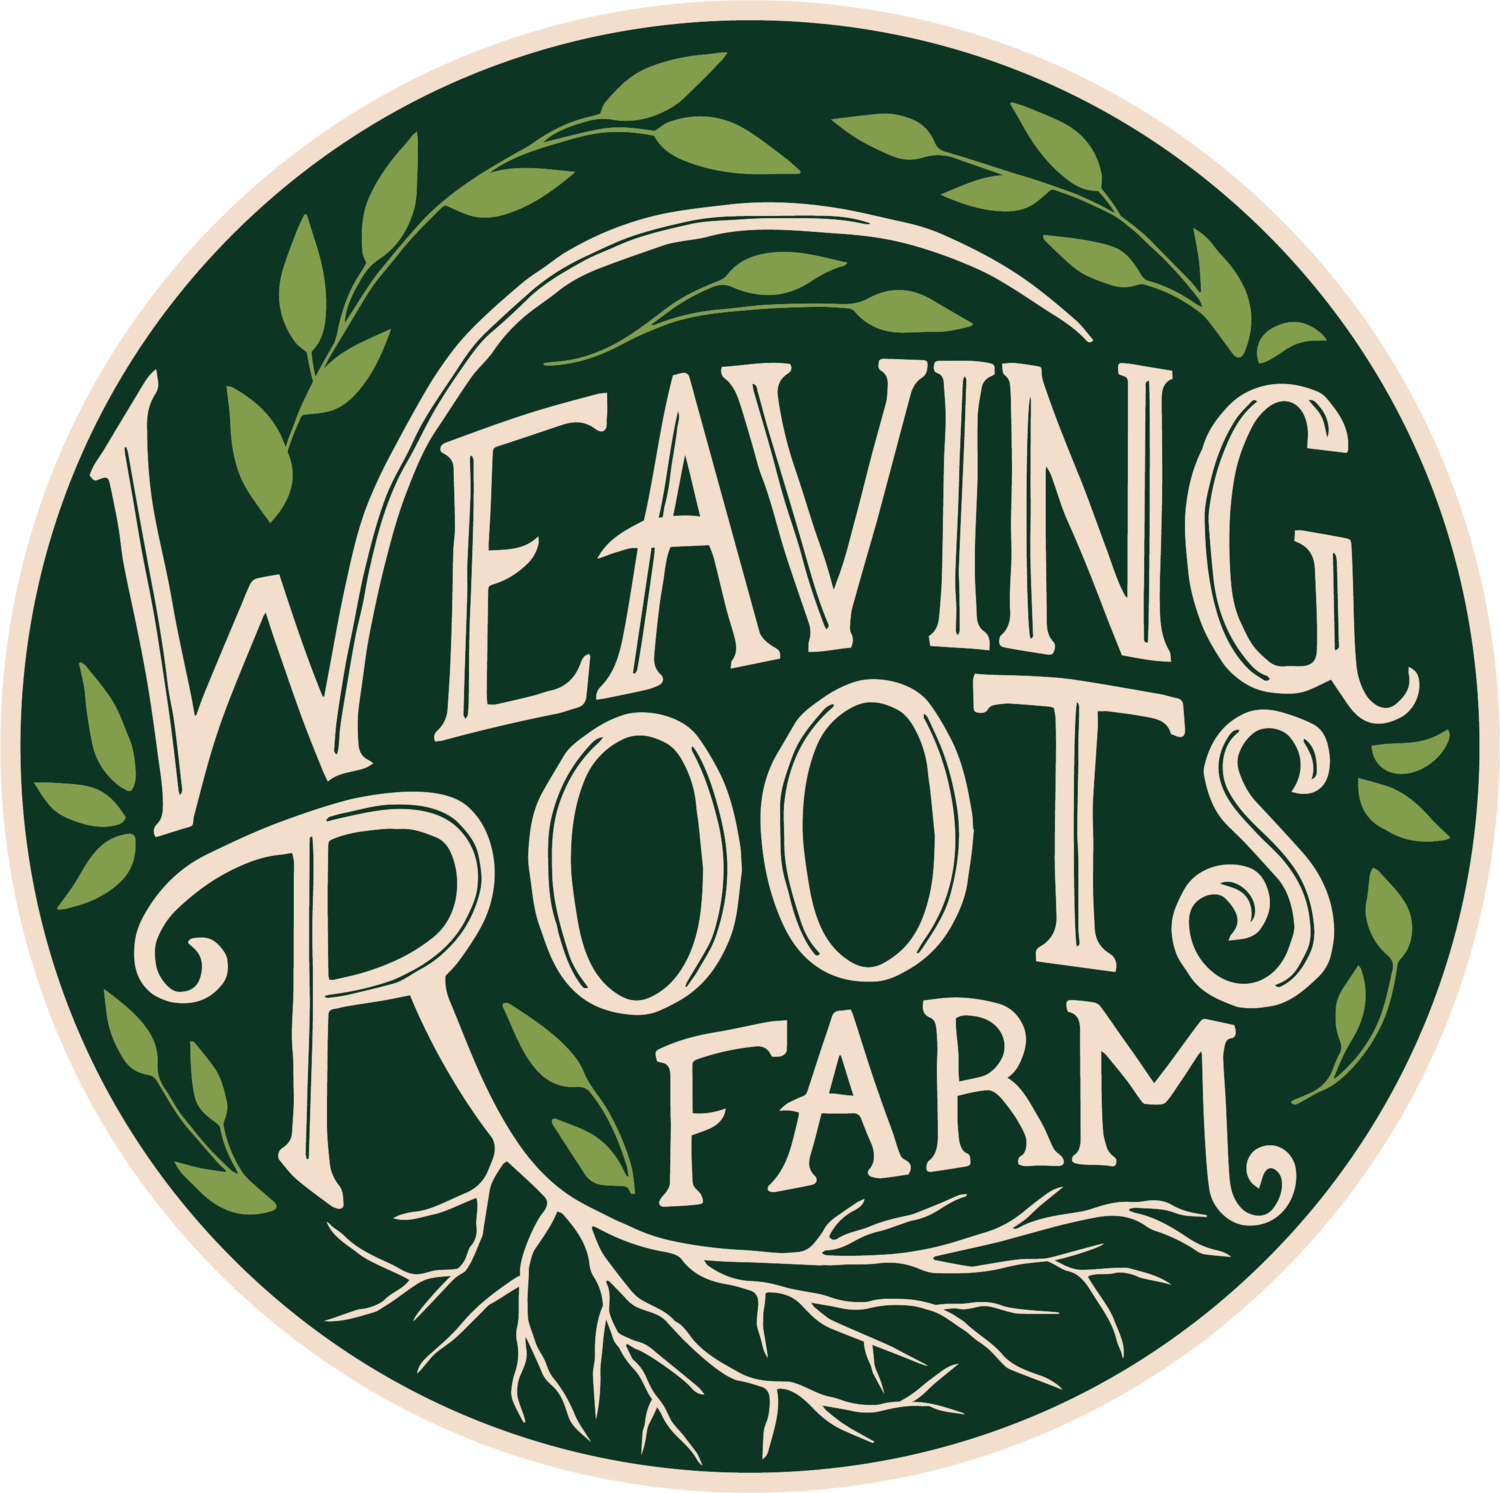 Weaving Roots Farm